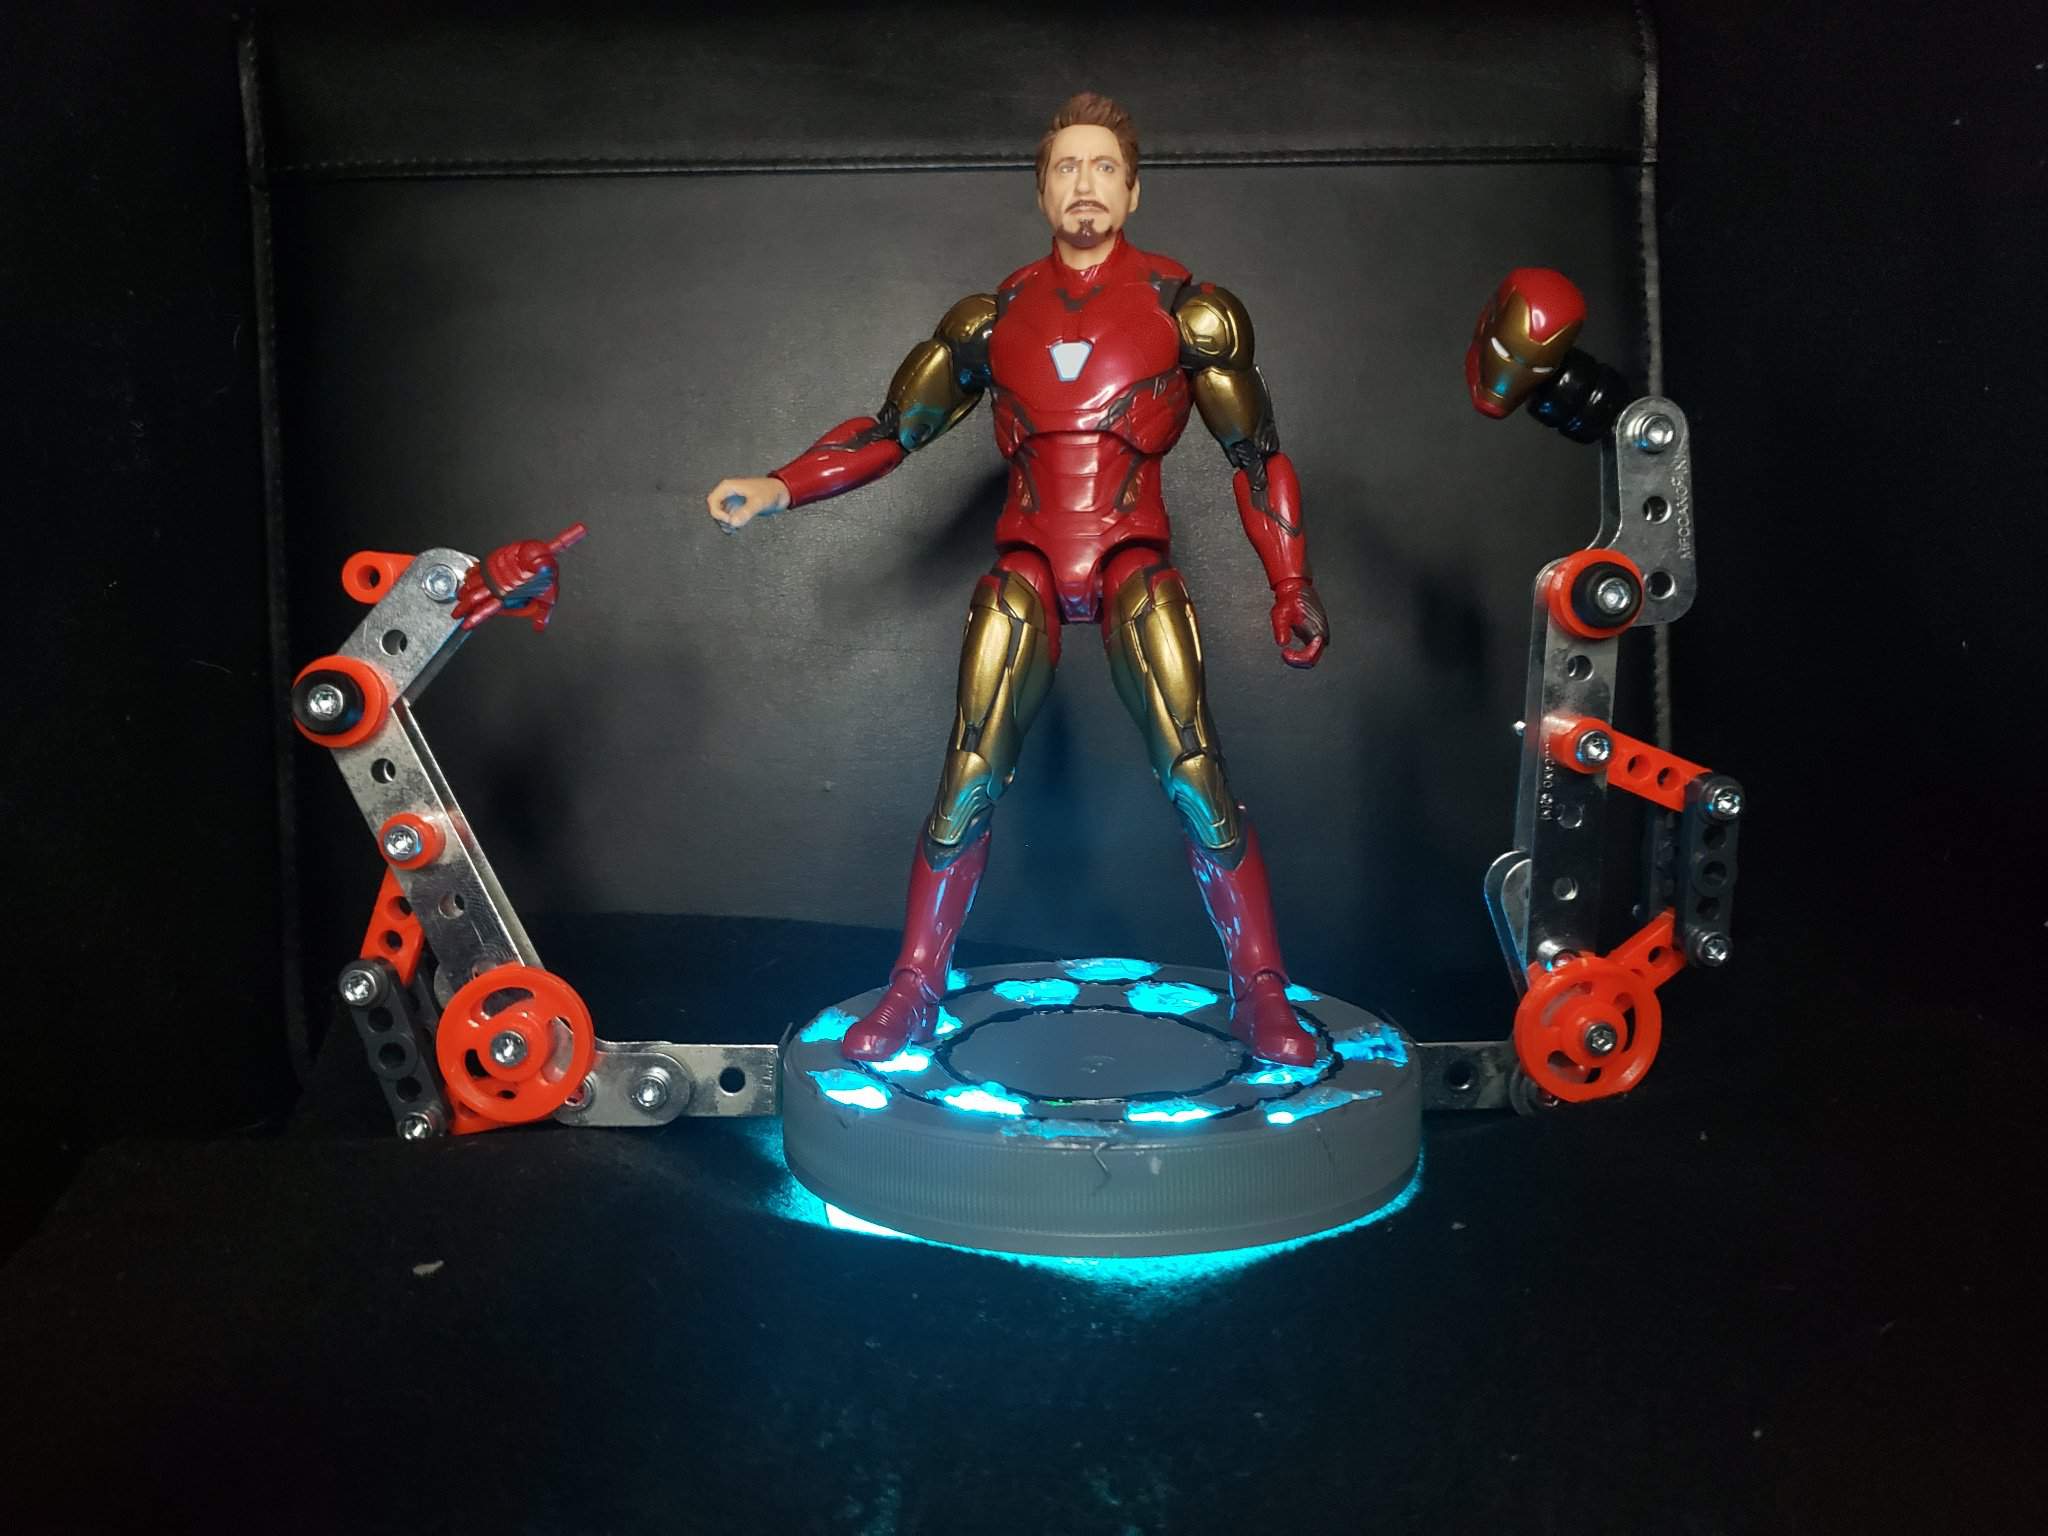 Custom Marvel's legends iron man suit up platform | Marvel Amino